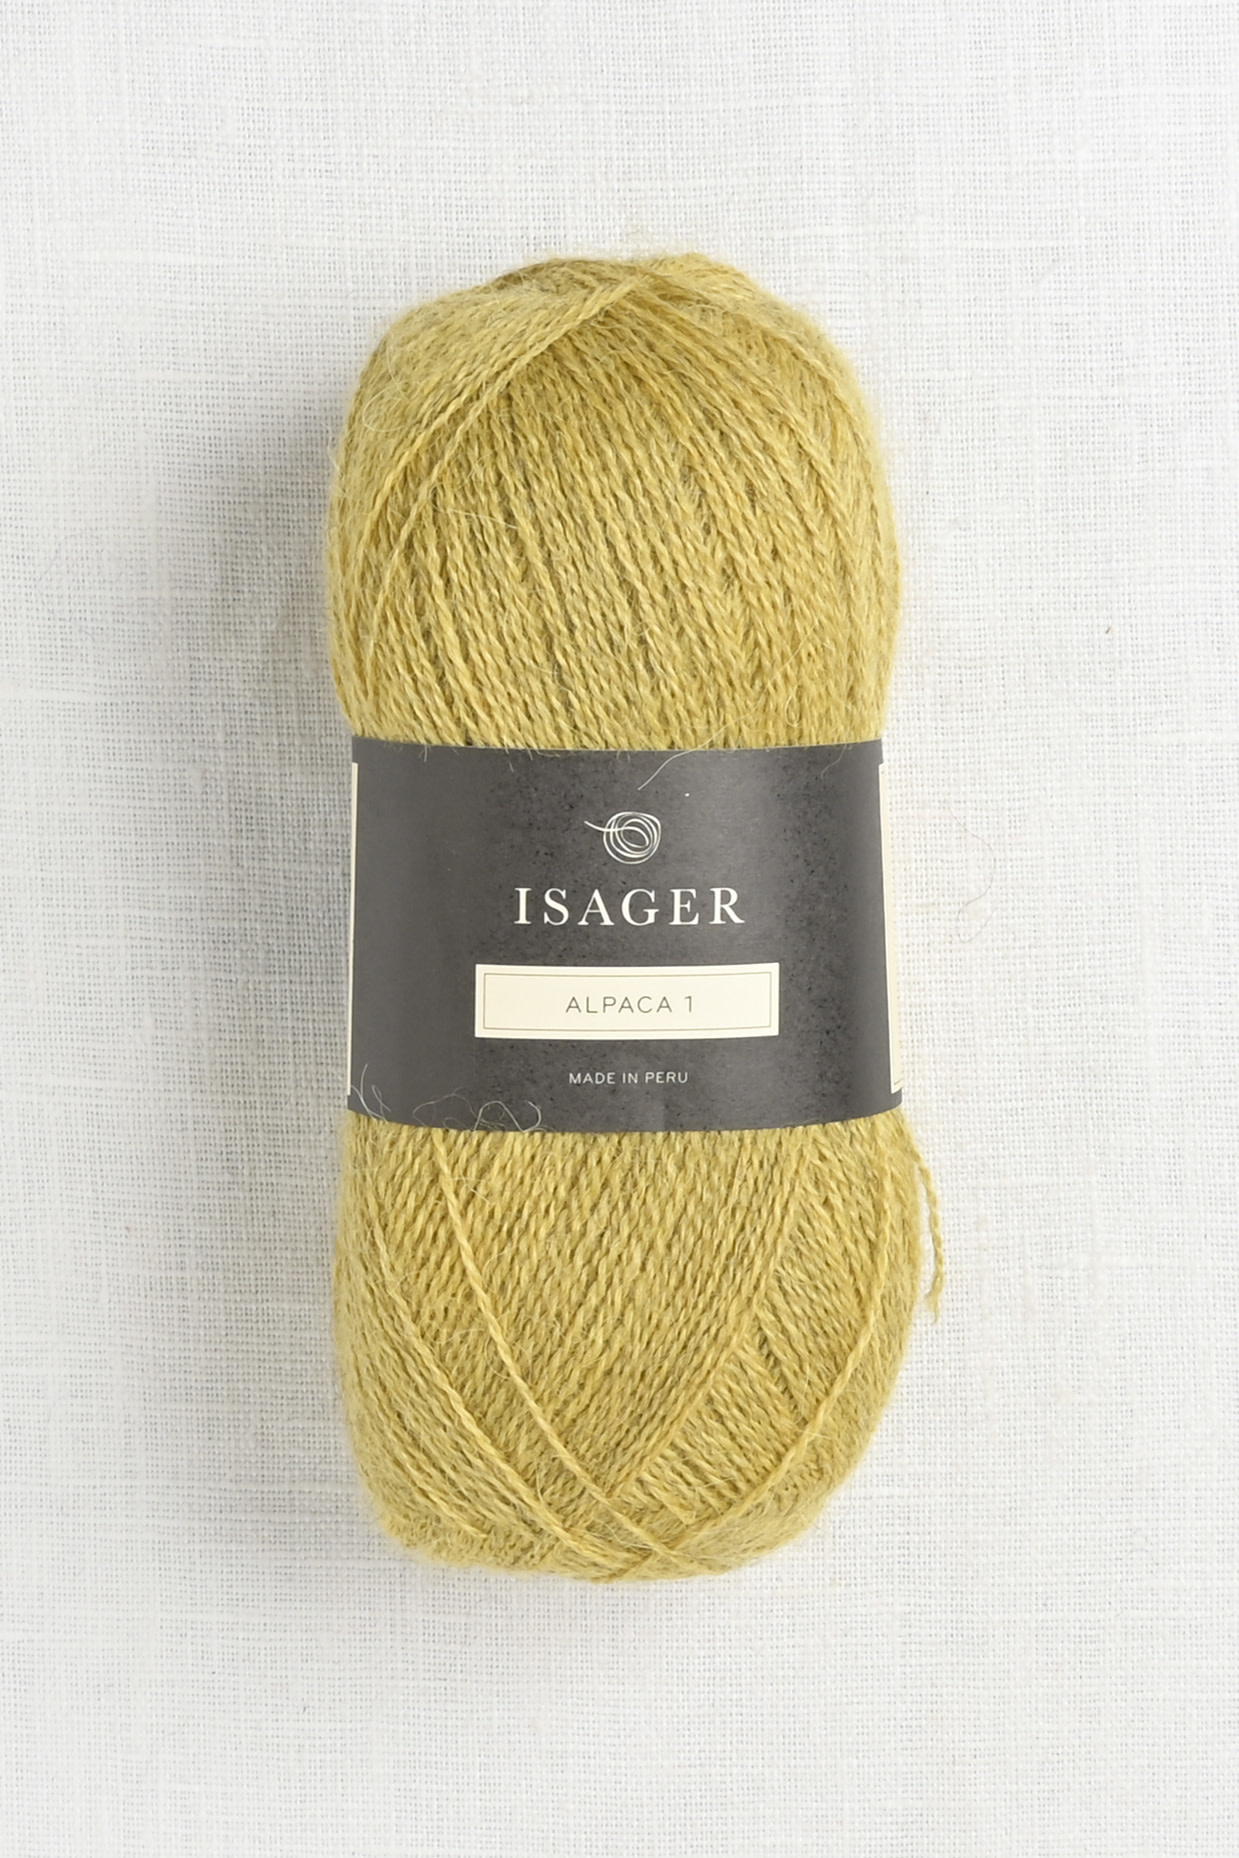 Isager Alpaca 1 40 - Wool and Company Fine Yarn